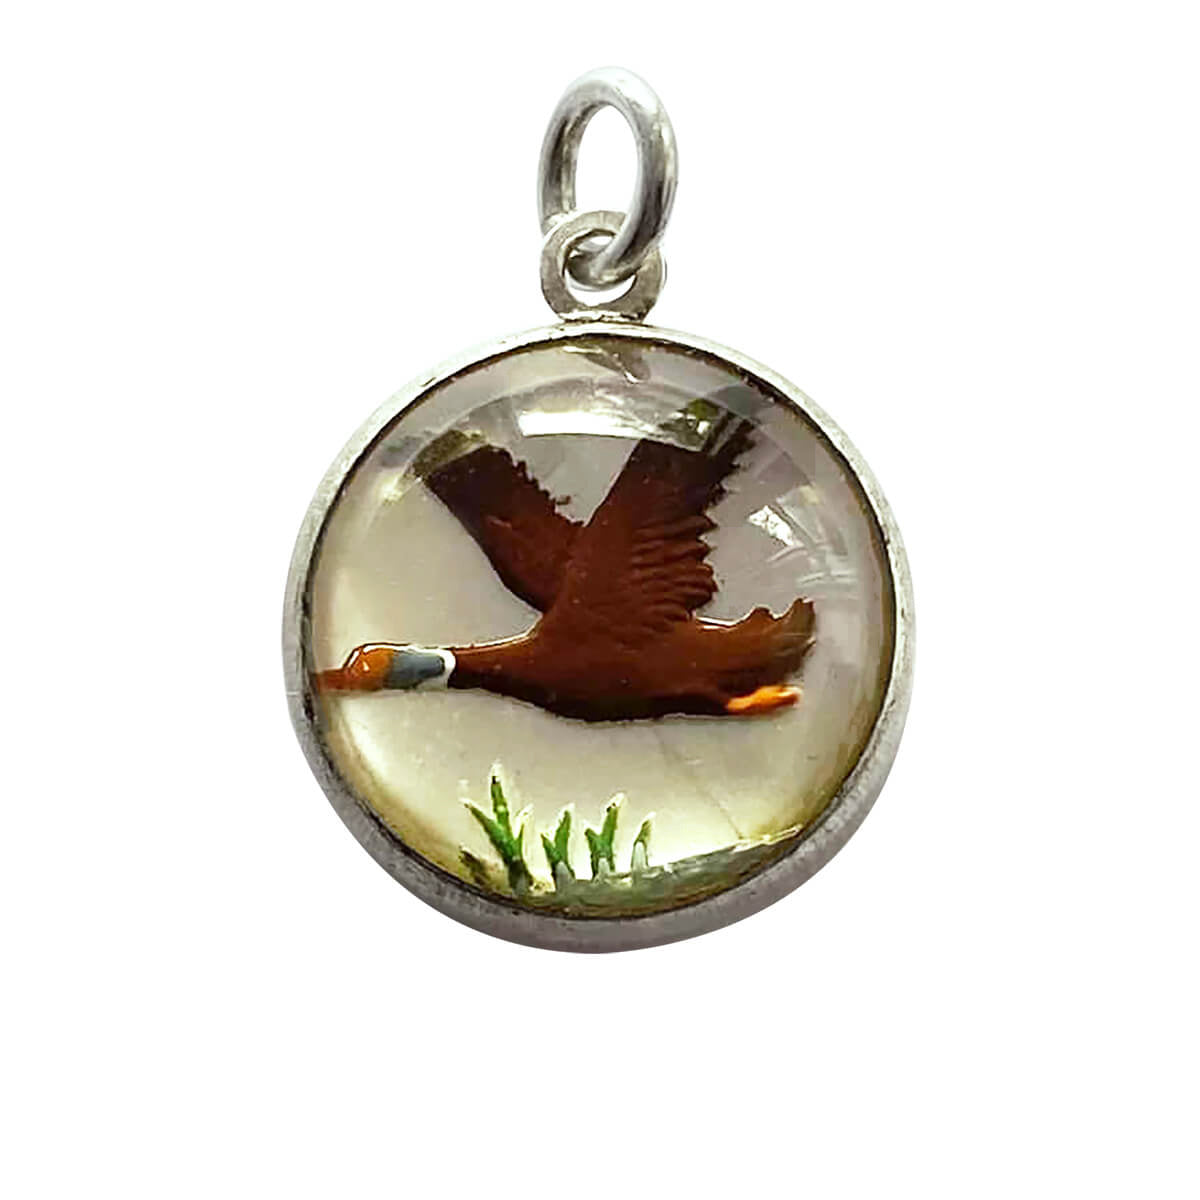 Essex crystal duck charm sterling silver bird pendant